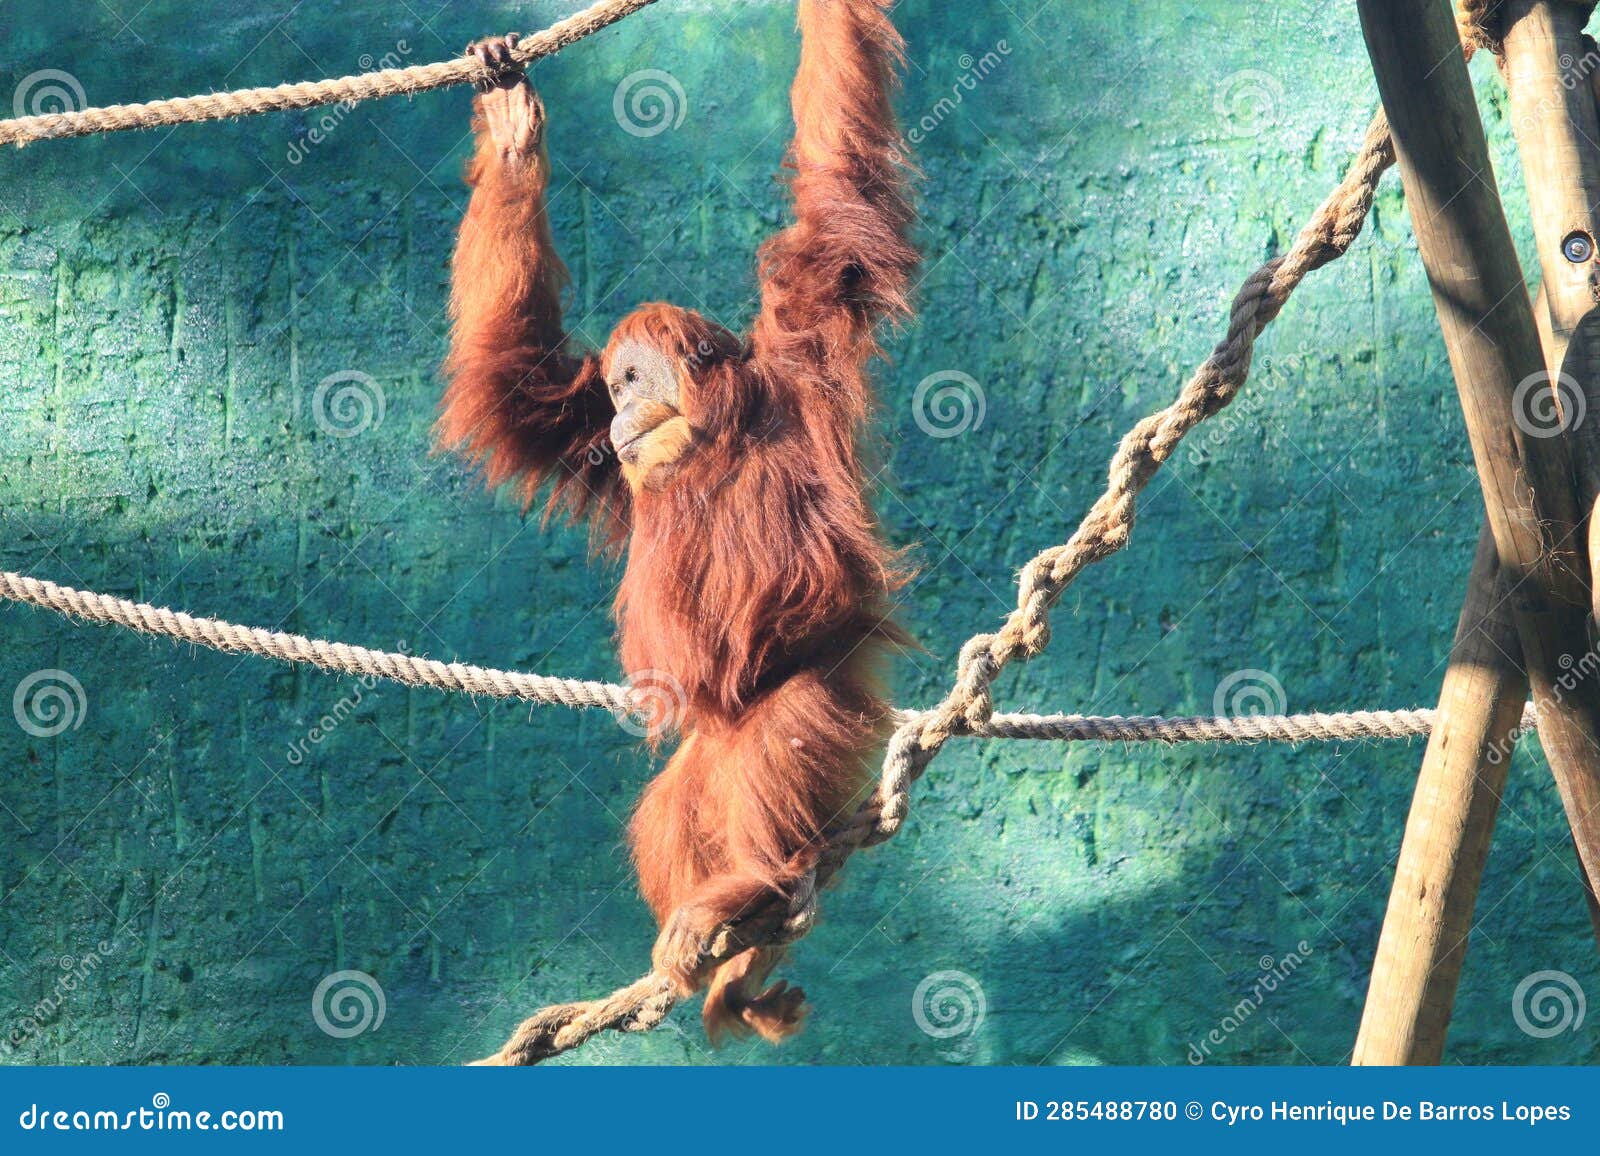 bornean orangutan (pongo pygmaeus) in toy rope structure, bornean simian, big monkey, tropical mammal species